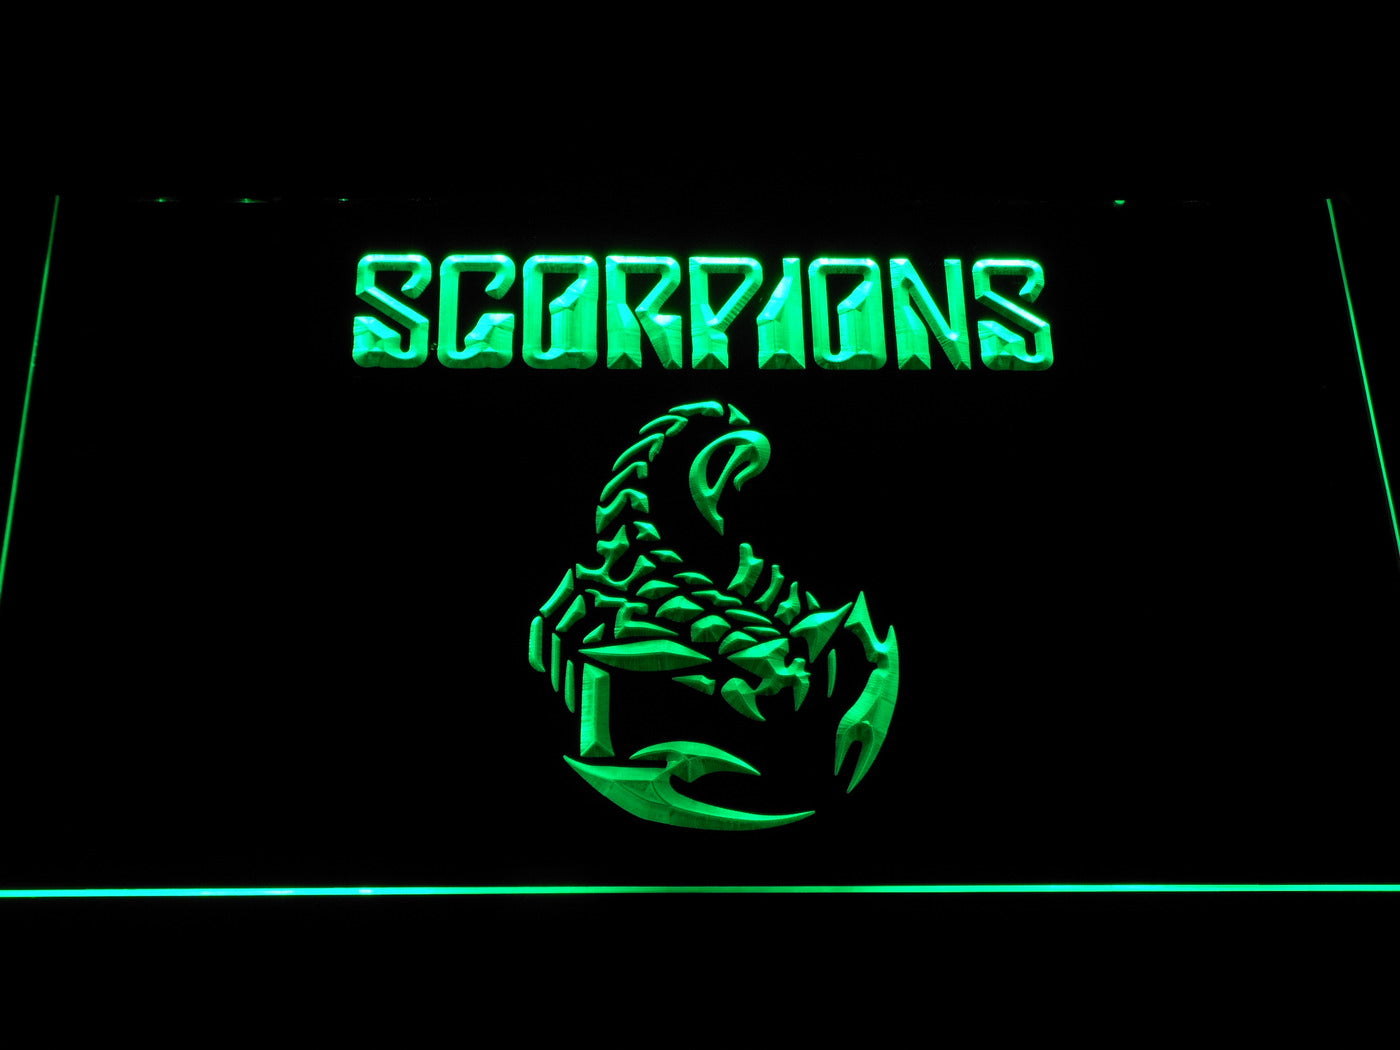 Scorpions Band Neon Light LED Sign